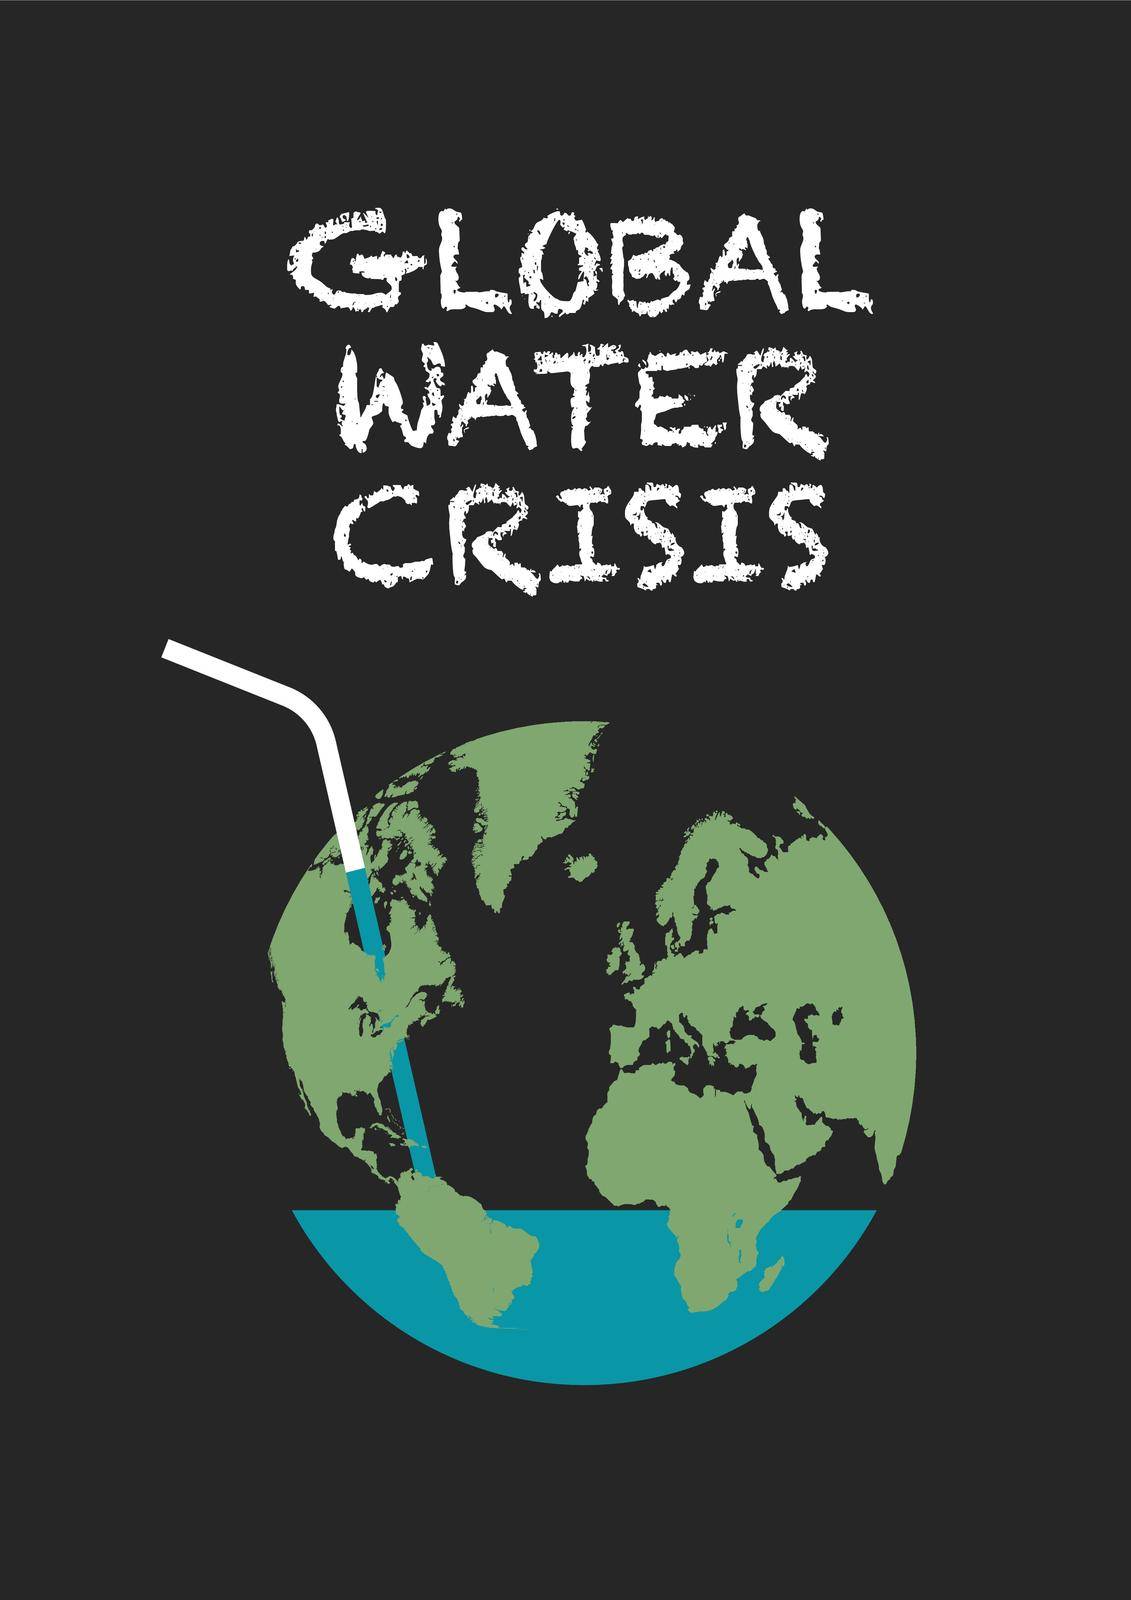 Global water crisis poster by siraanamwong